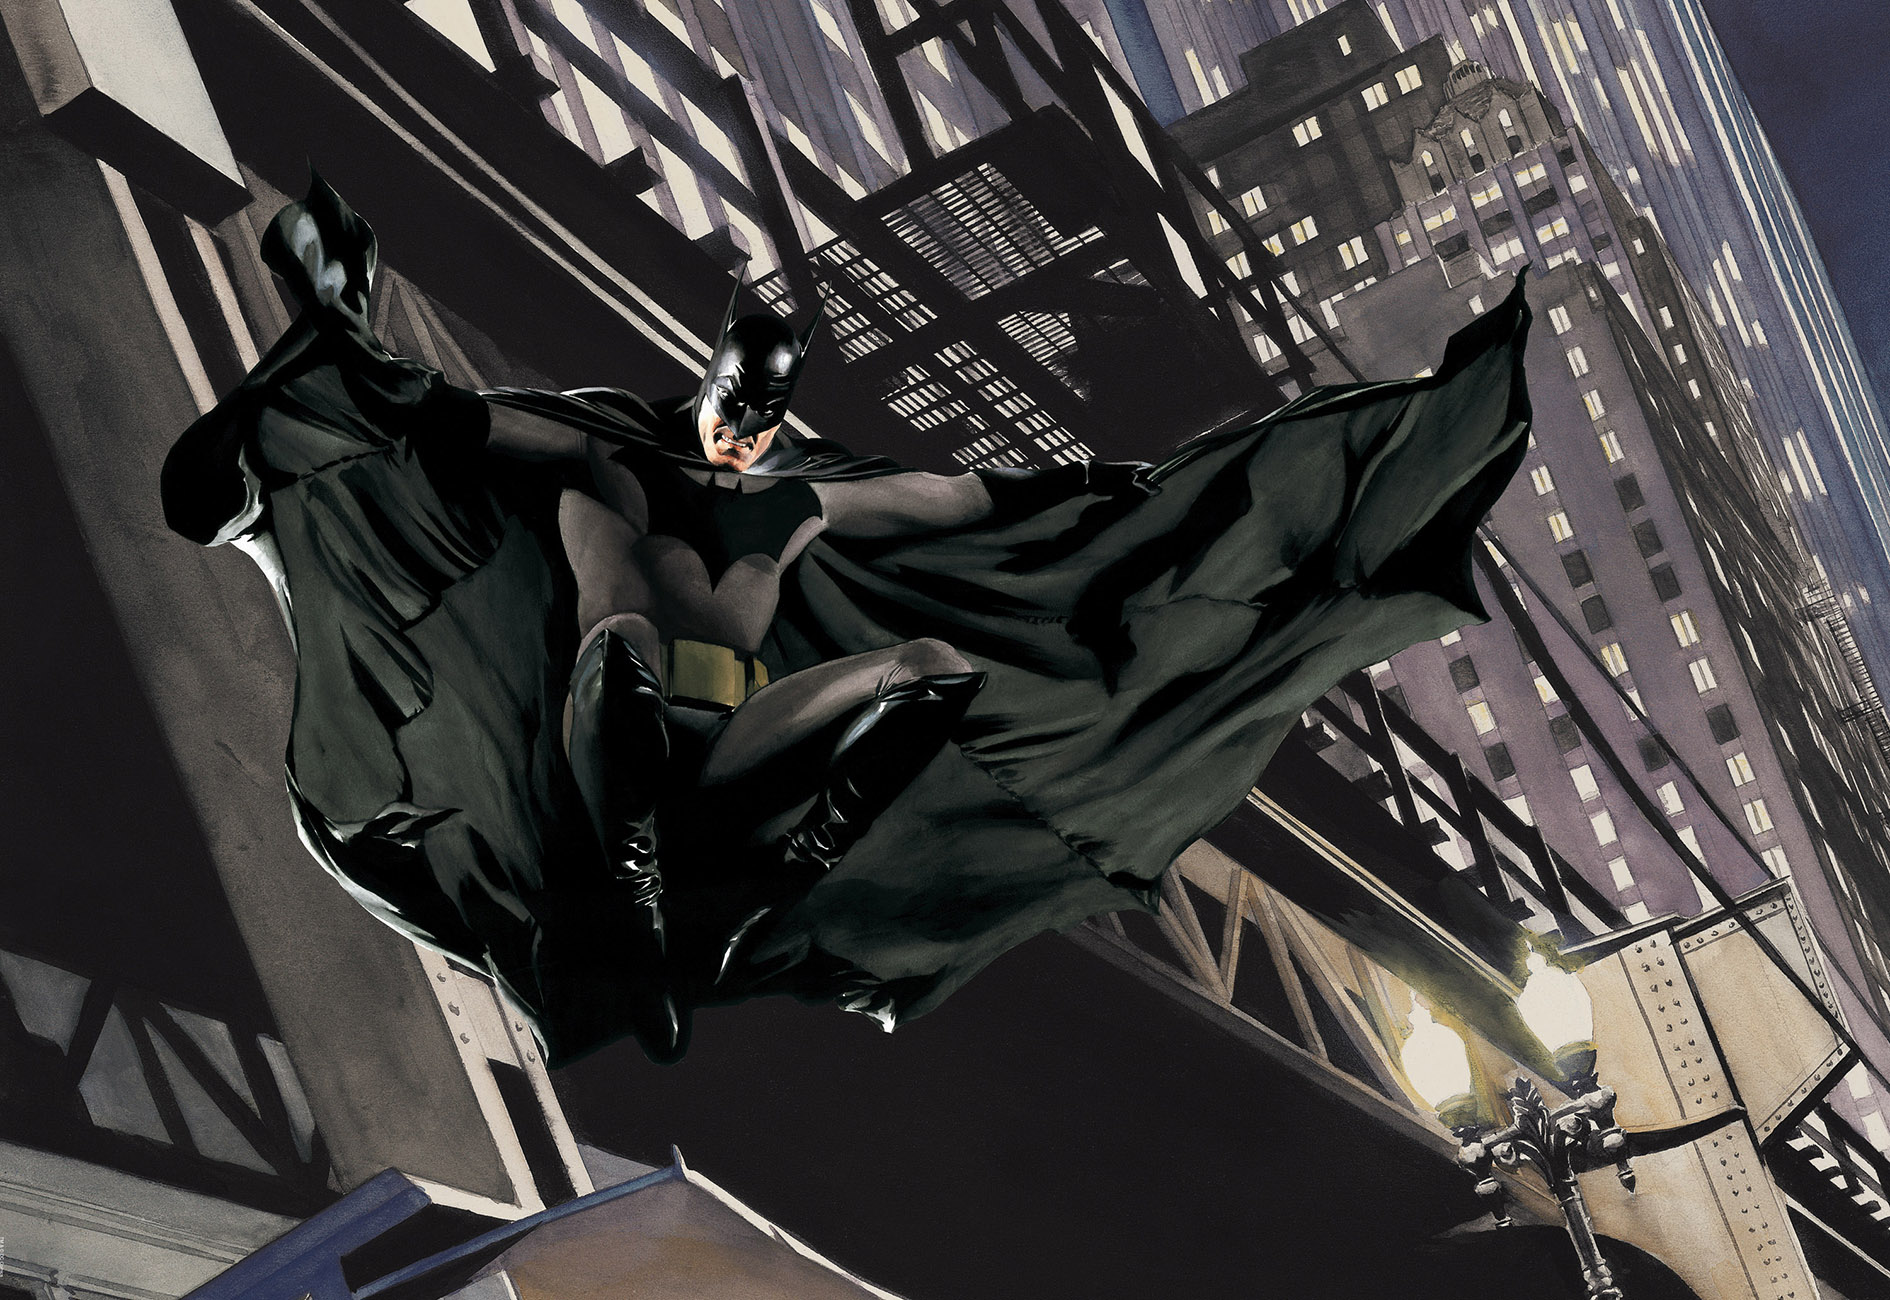 Sideshow Collectibles "Batman Descent on Gotham" by Alex Ross Fine Art Print